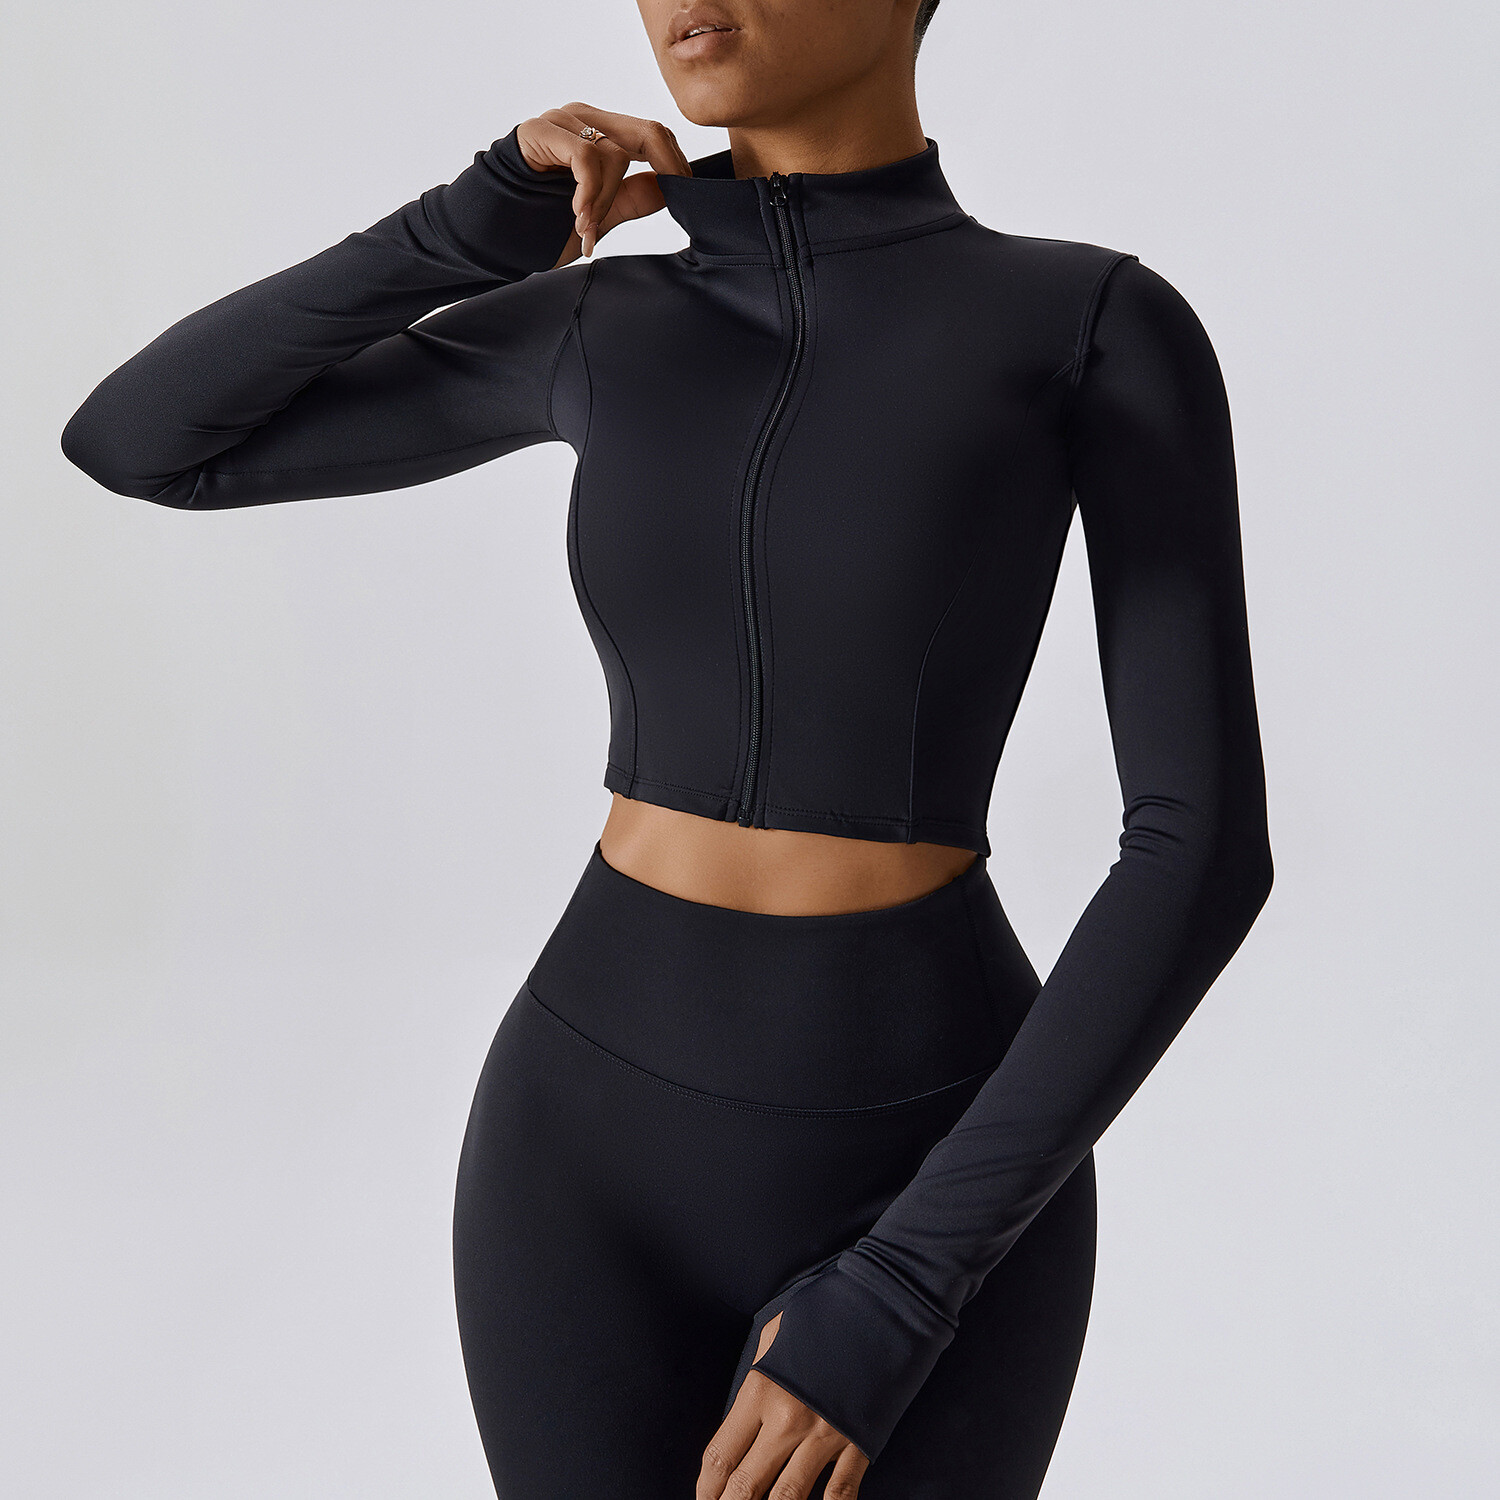 Zipper Outdoor Running Sports Yoga Jacket Slimming Fitness Long Sleeve Jacket, Color: Premium black, Size: 8/s